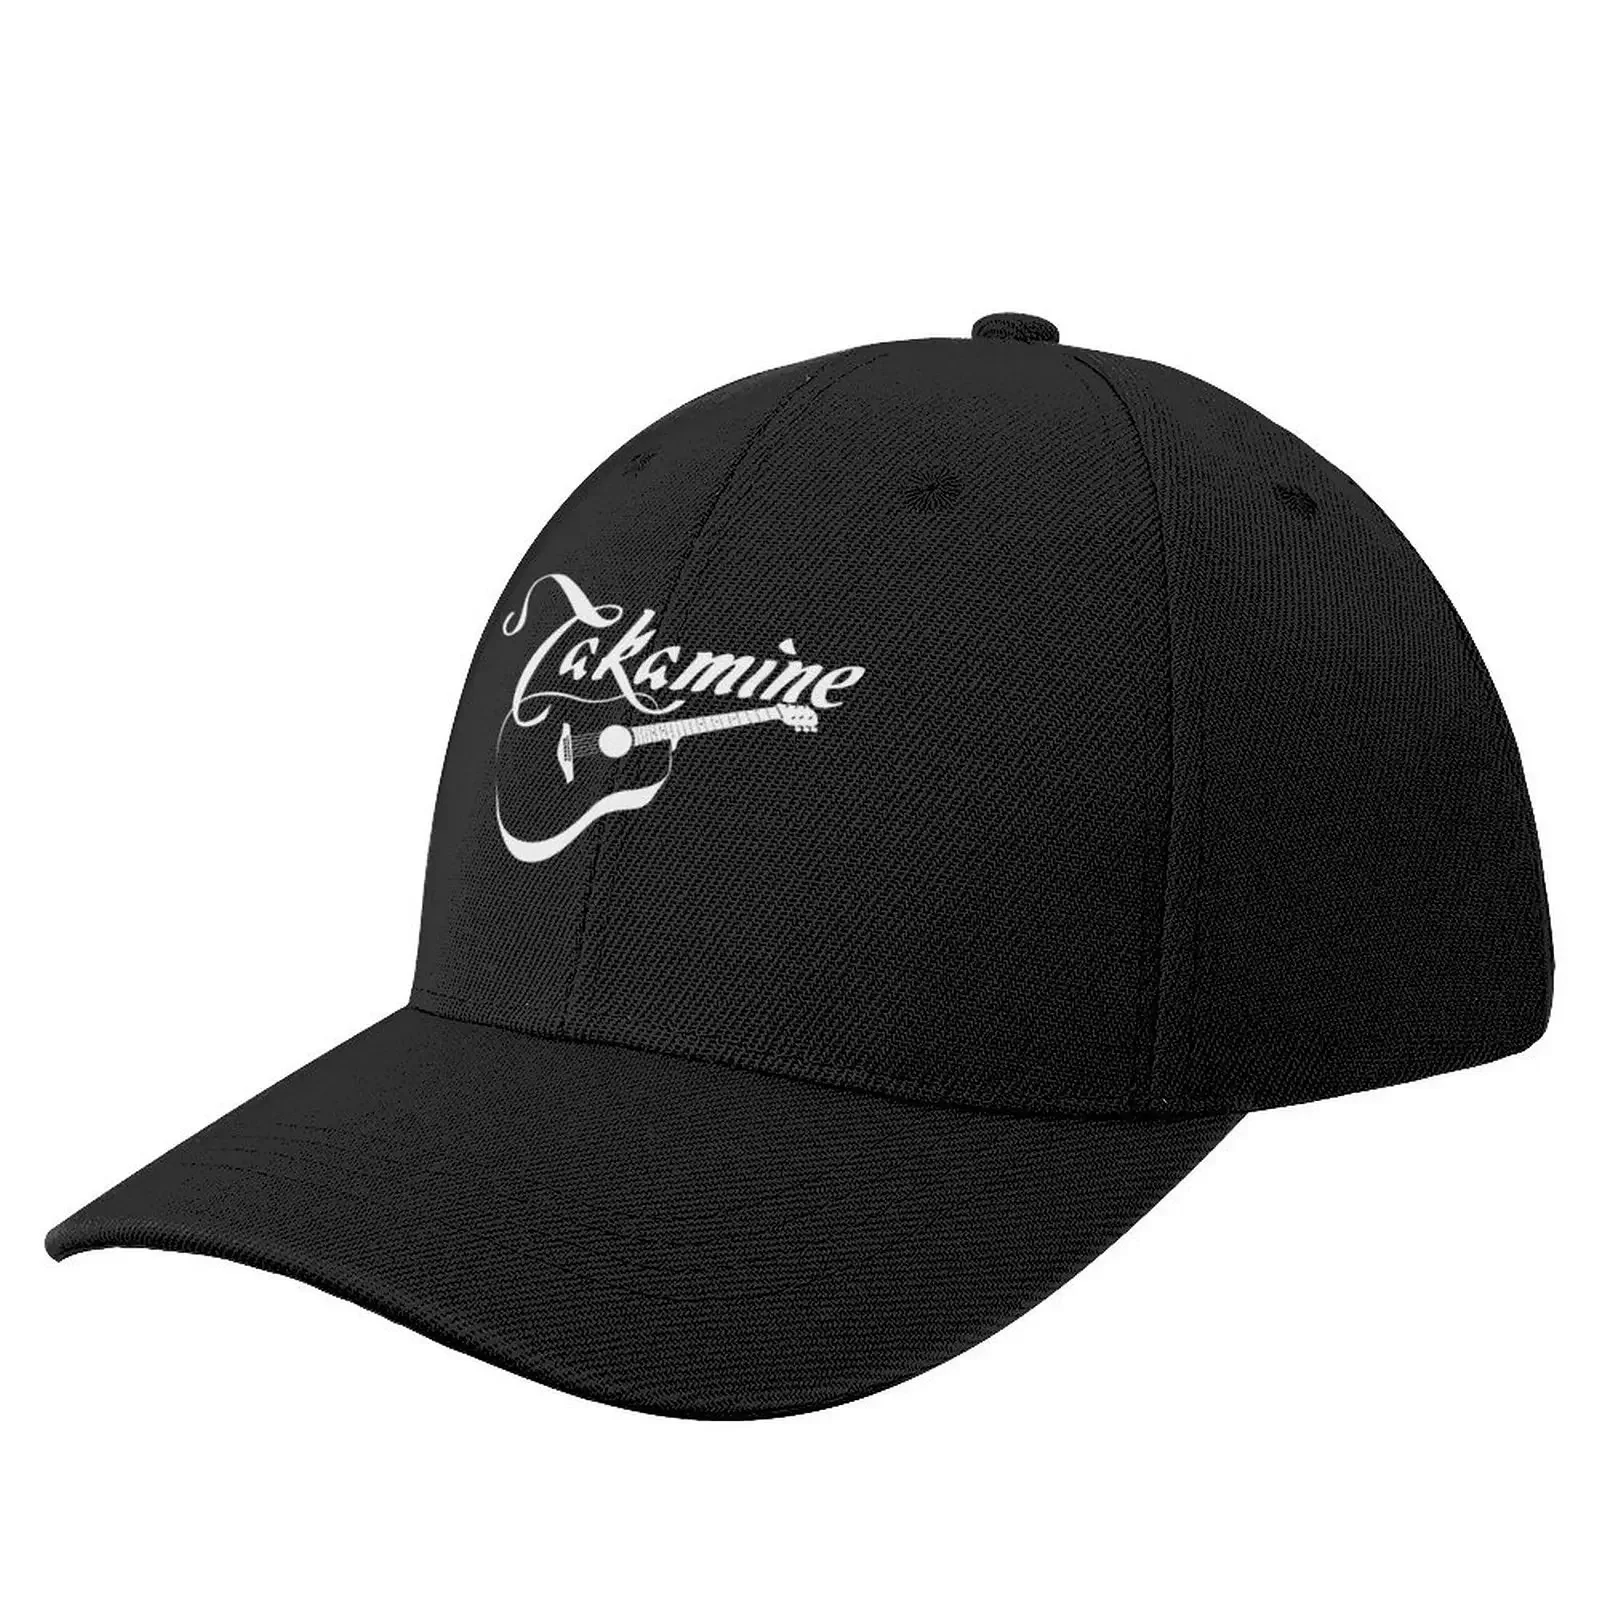 Takamine Guitars Baseball Cap New In The Hat Brand Man cap hard hat Men's Women's